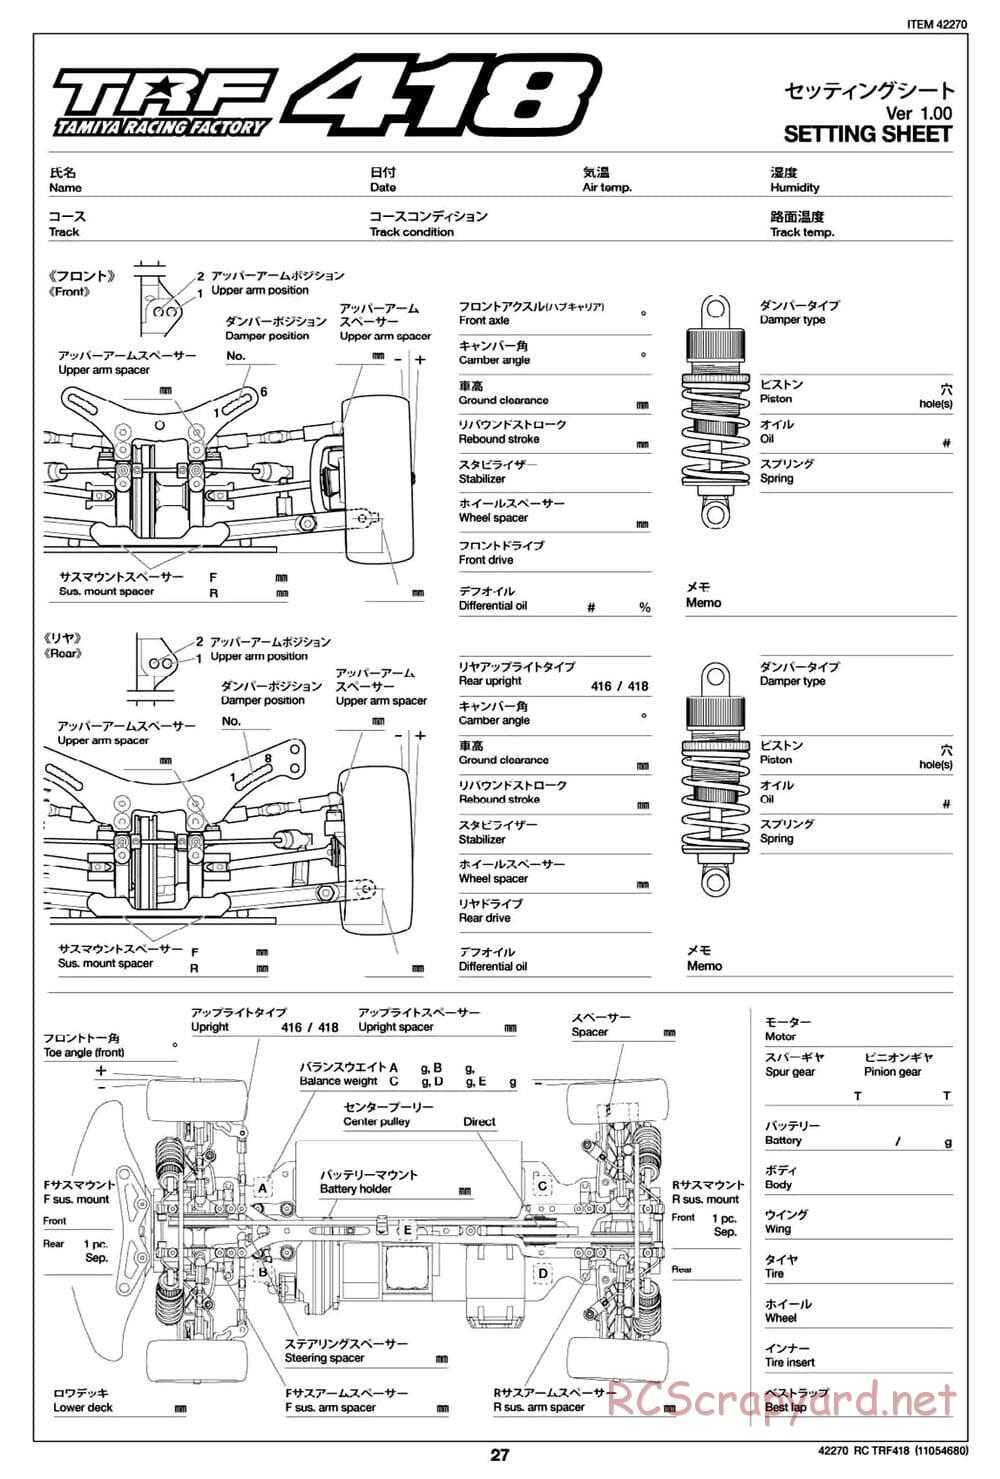 Tamiya - TRF418 Chassis - Manual - Page 27